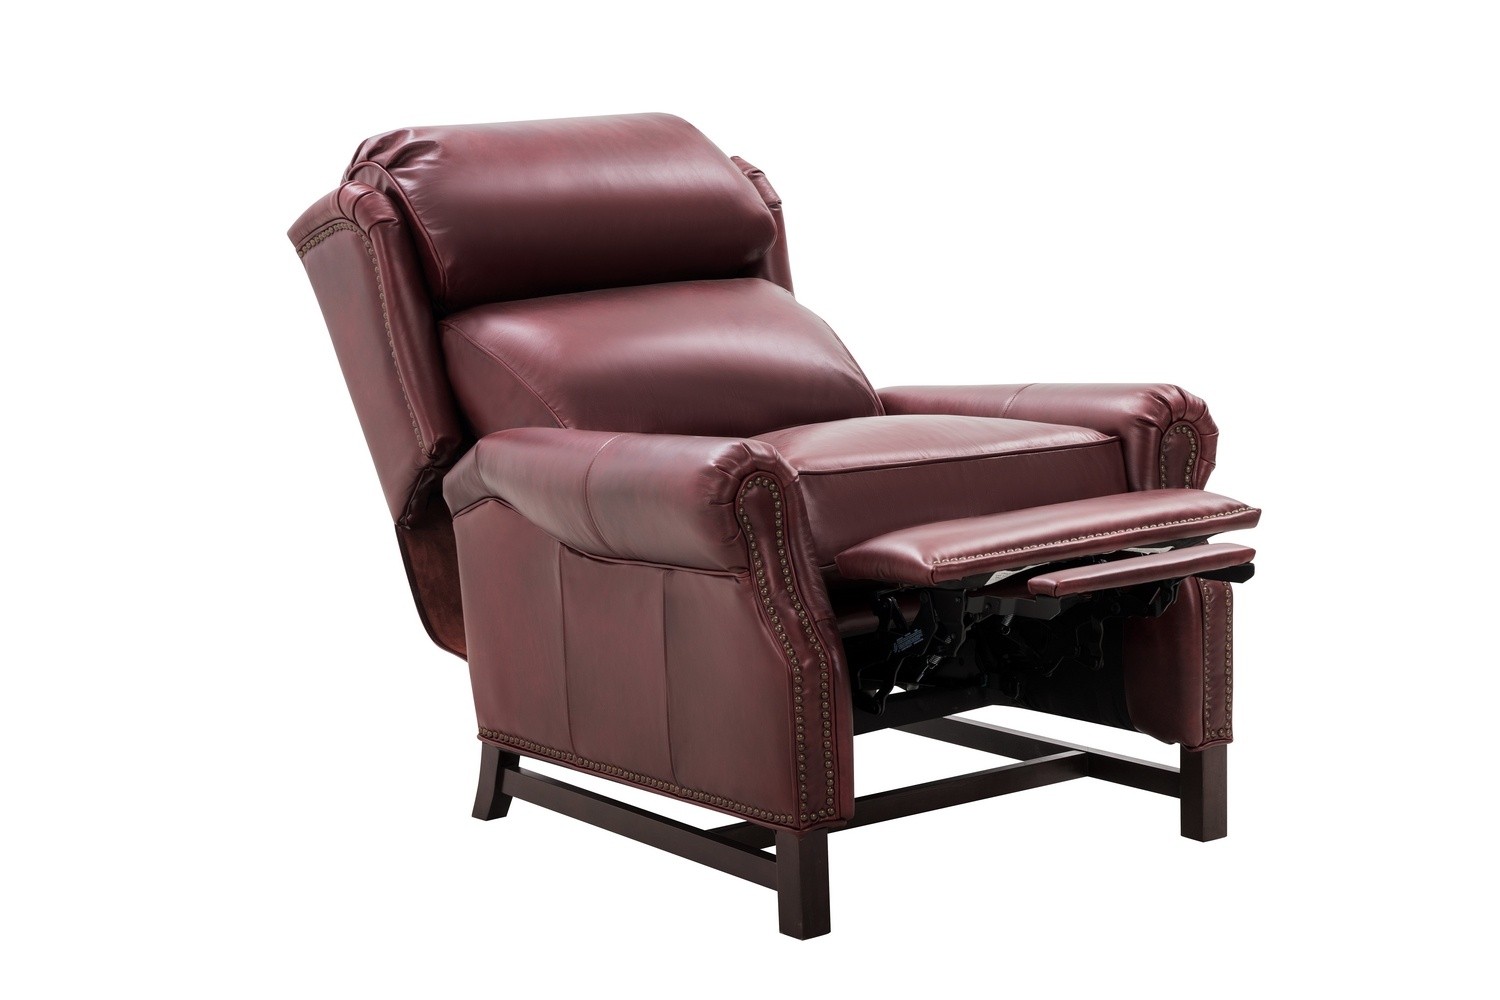 Barcalounger Thornfield Recliner Chair - Emerson Sangria/Top Grain Leather